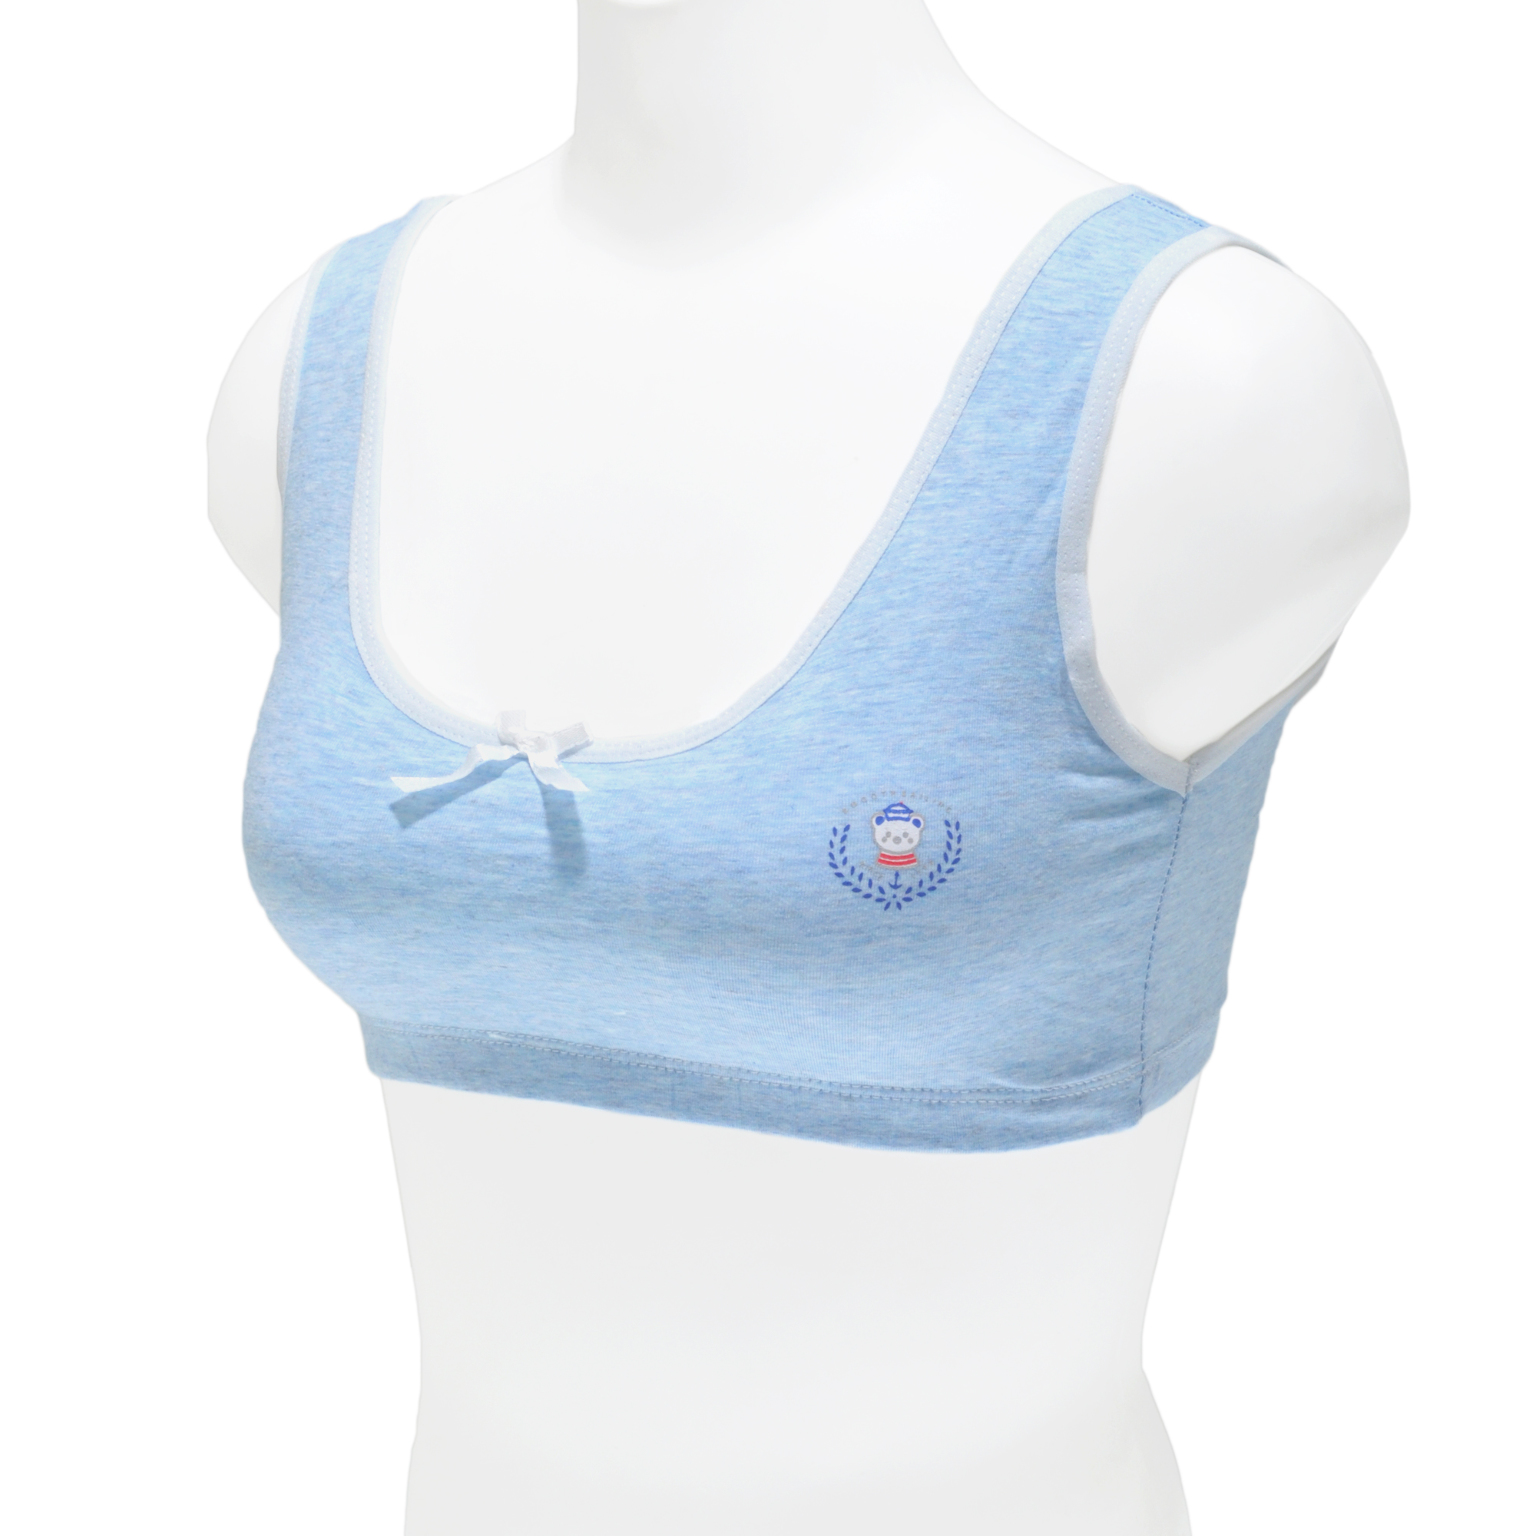 Girls' Cotton Training Bras - Assorted Colors, Small-XL, Bear Print Detail